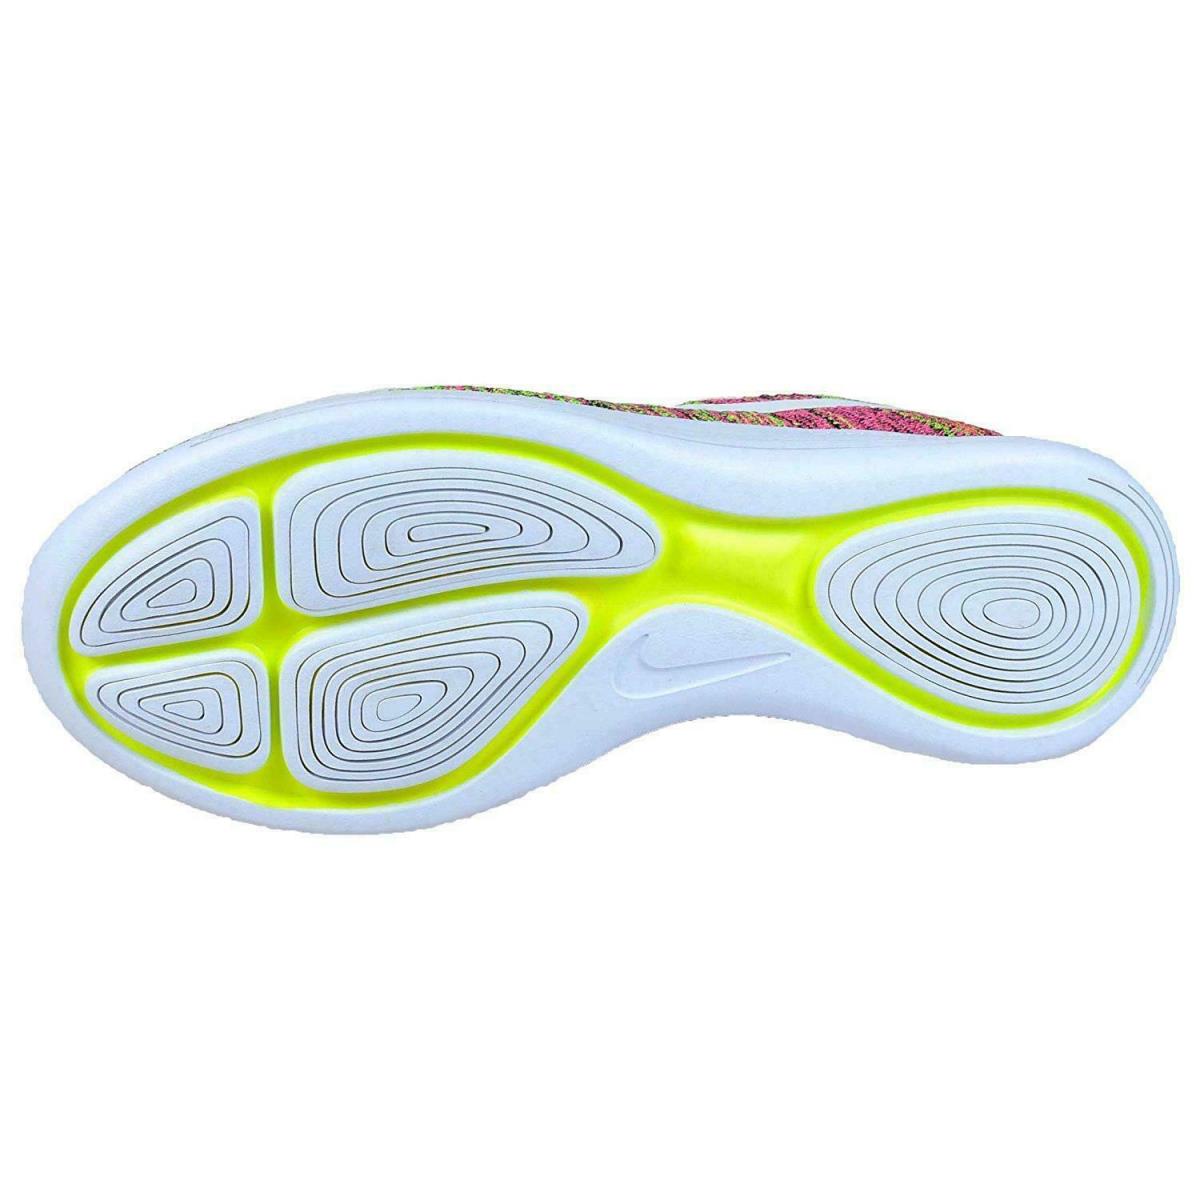 Nike shoes LunarEpic Low Flyknit - Multi Color 5